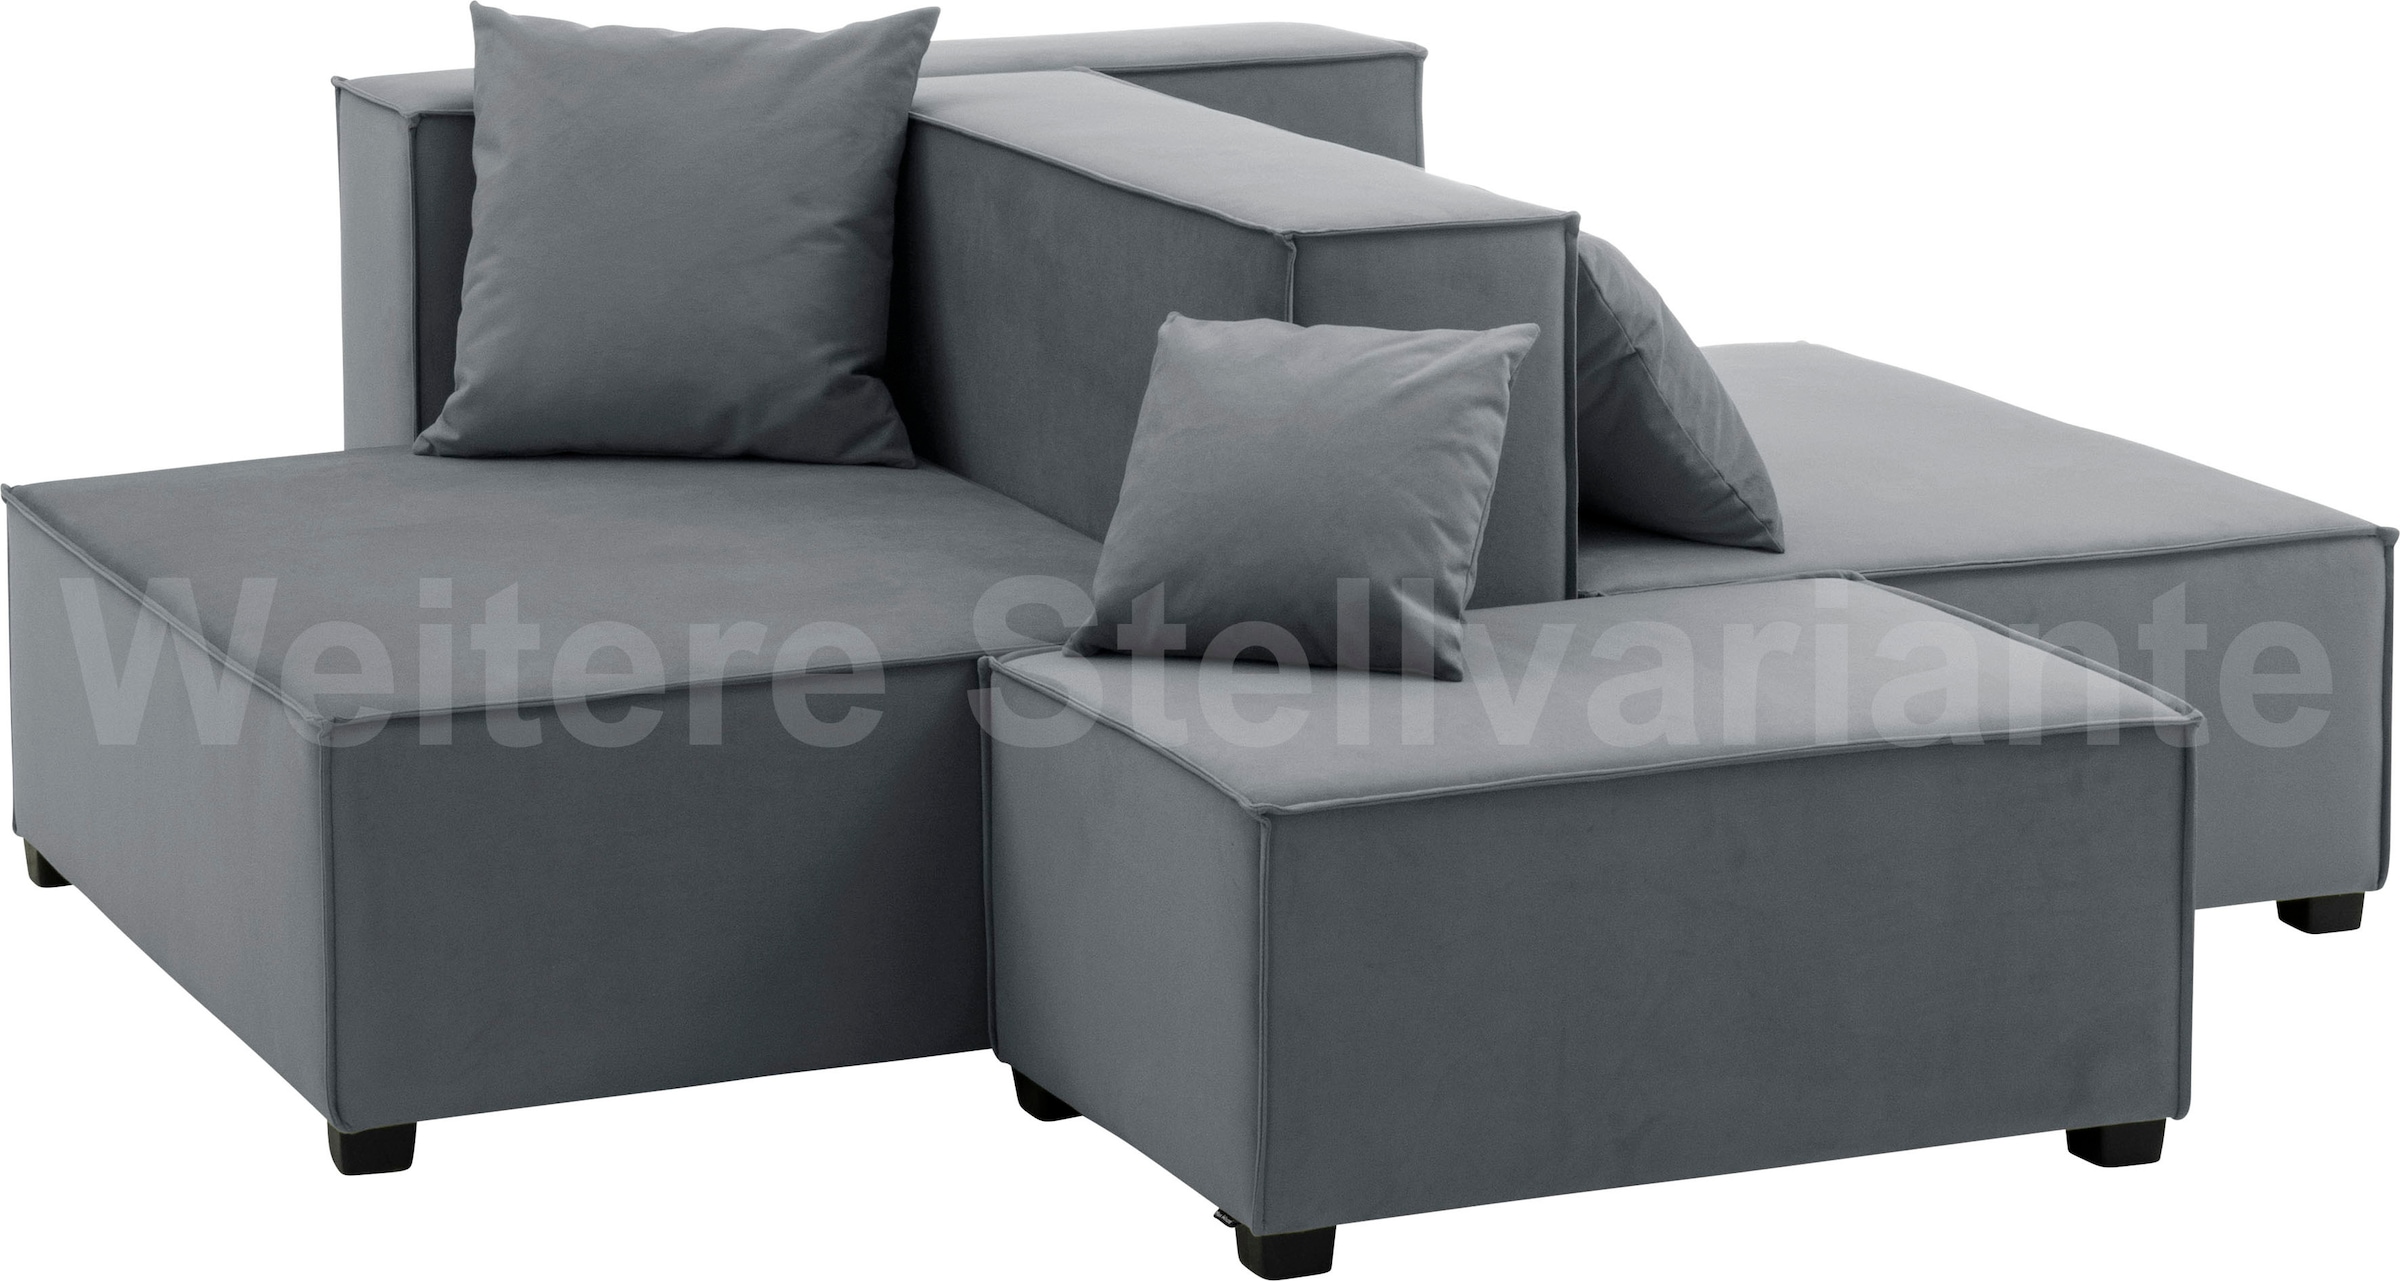 Max Winzer® Wohnlandschaft »MOVE«, (Set), Sofa-Set 08 aus 5 Sitz-Elementen, inklusive 3 Zierkissen, kombinierbar